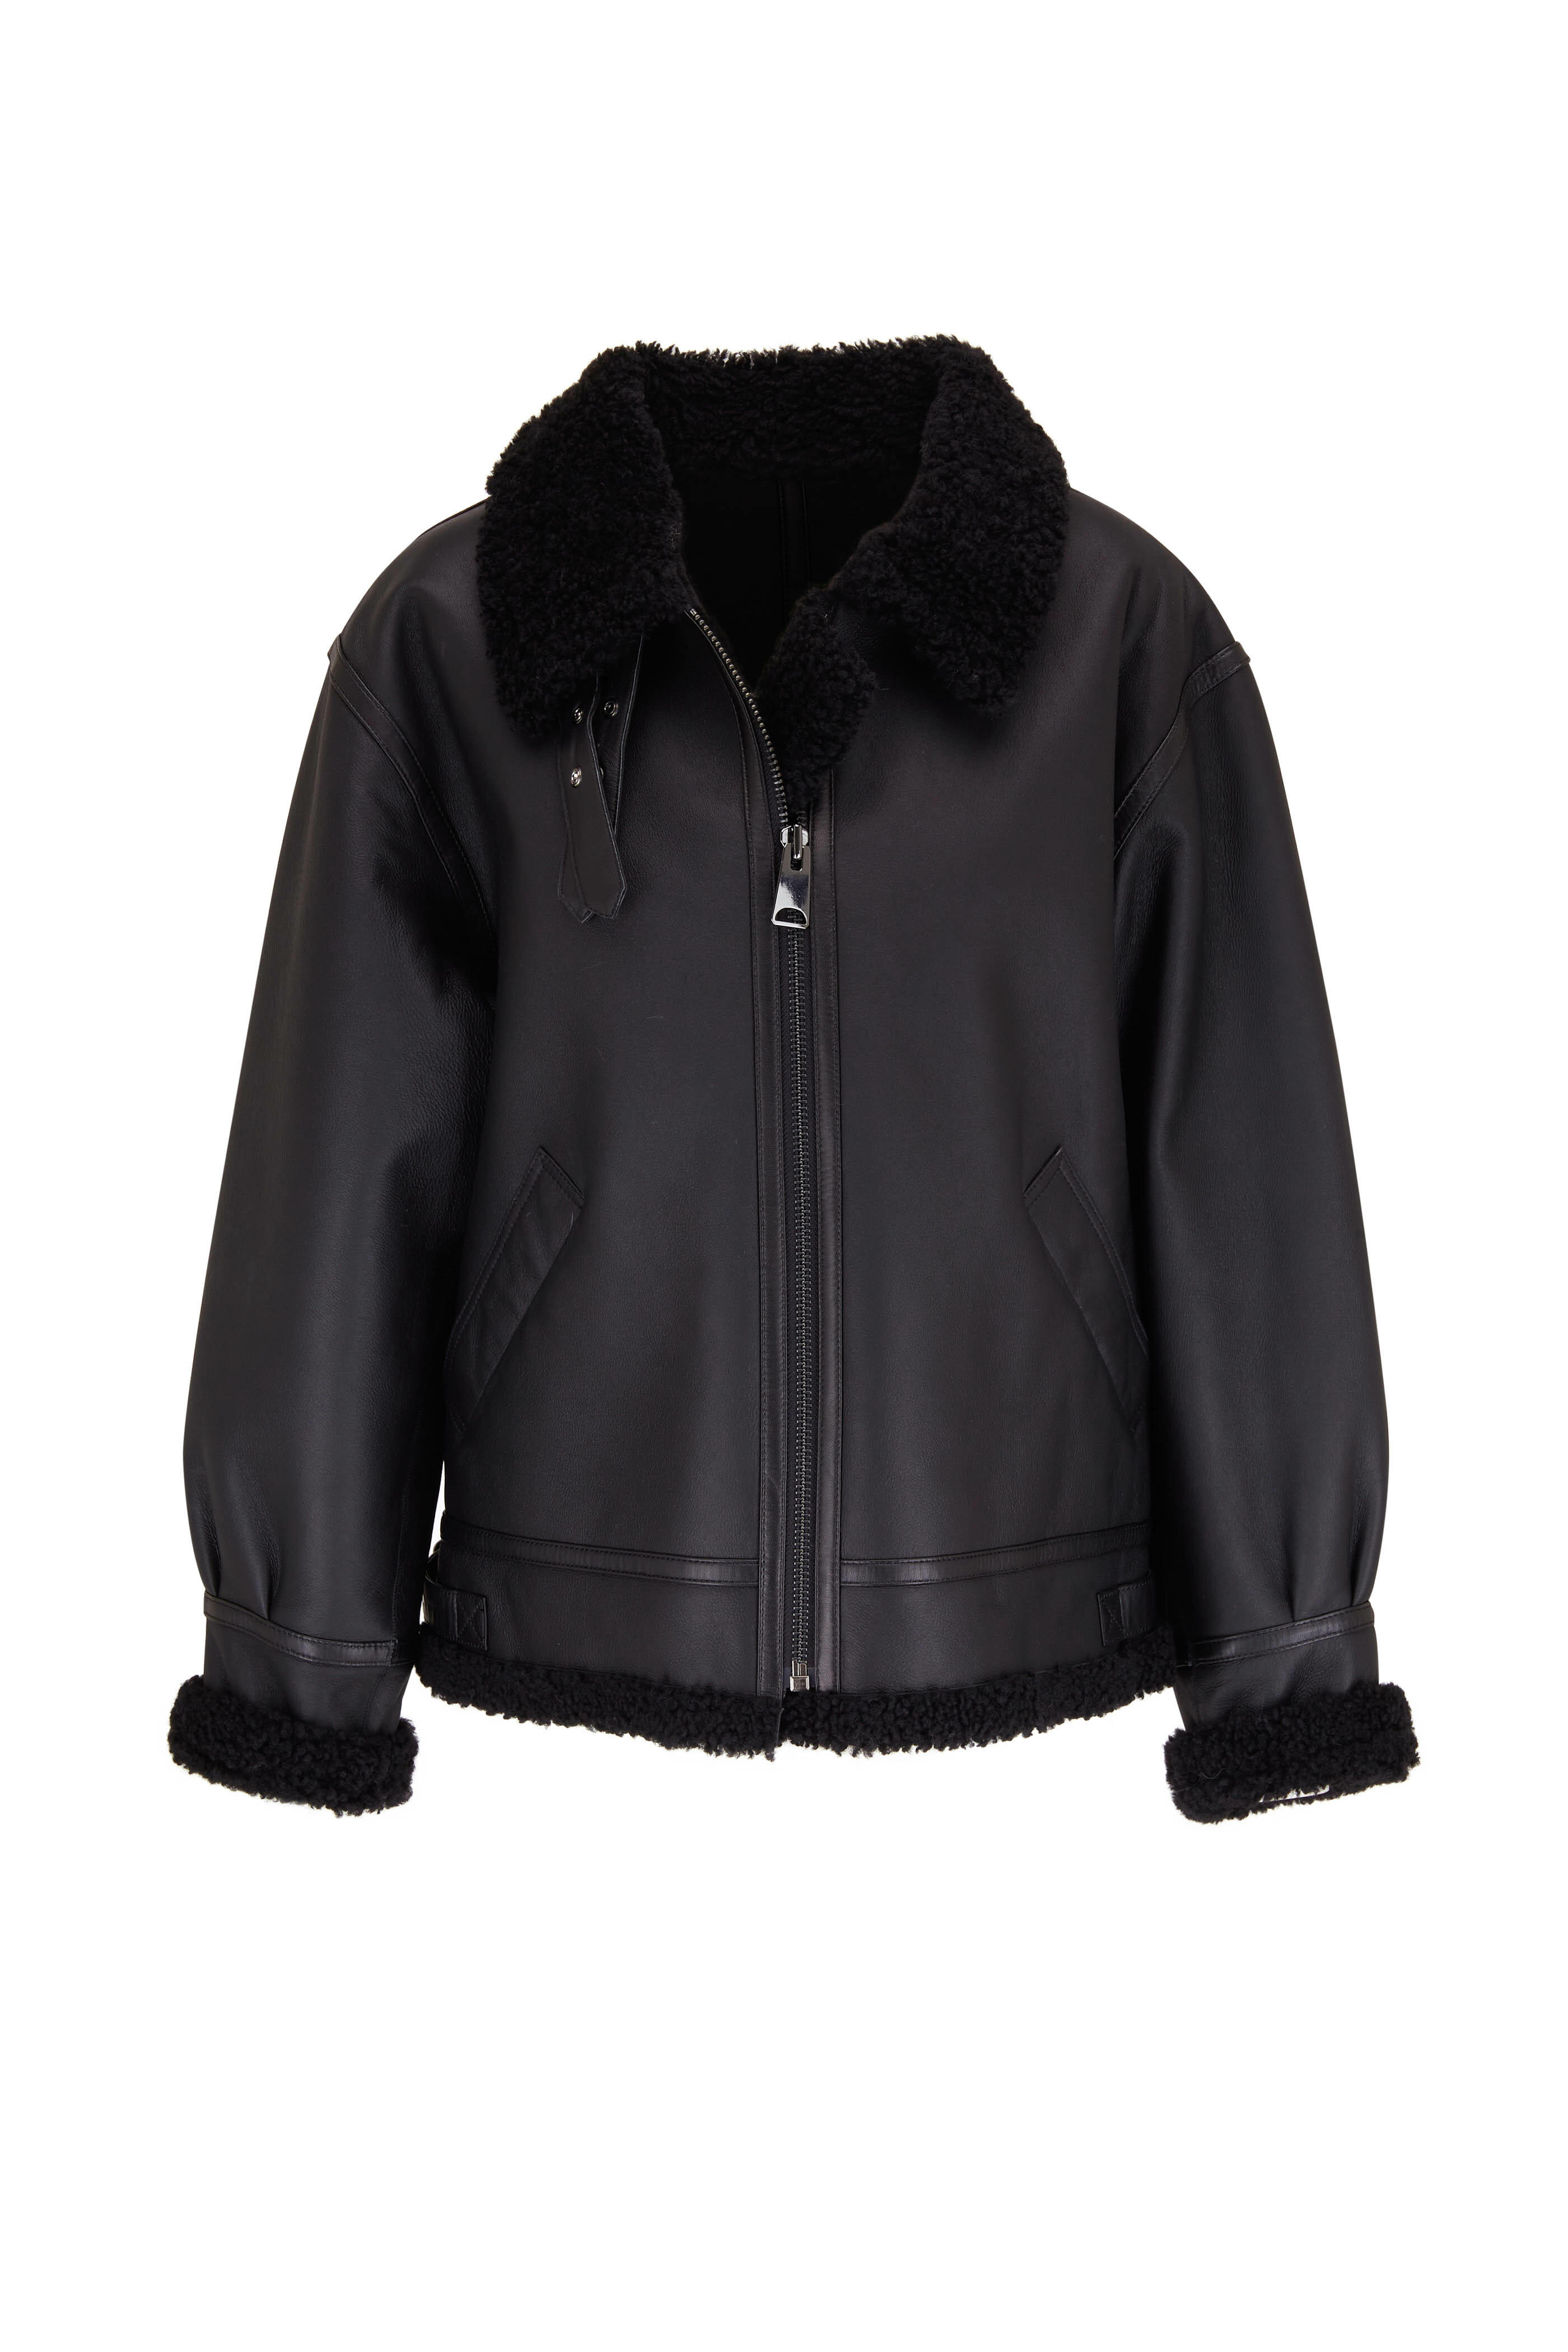 Pologeorgis - Black Shearling & Leather Zip Jacket